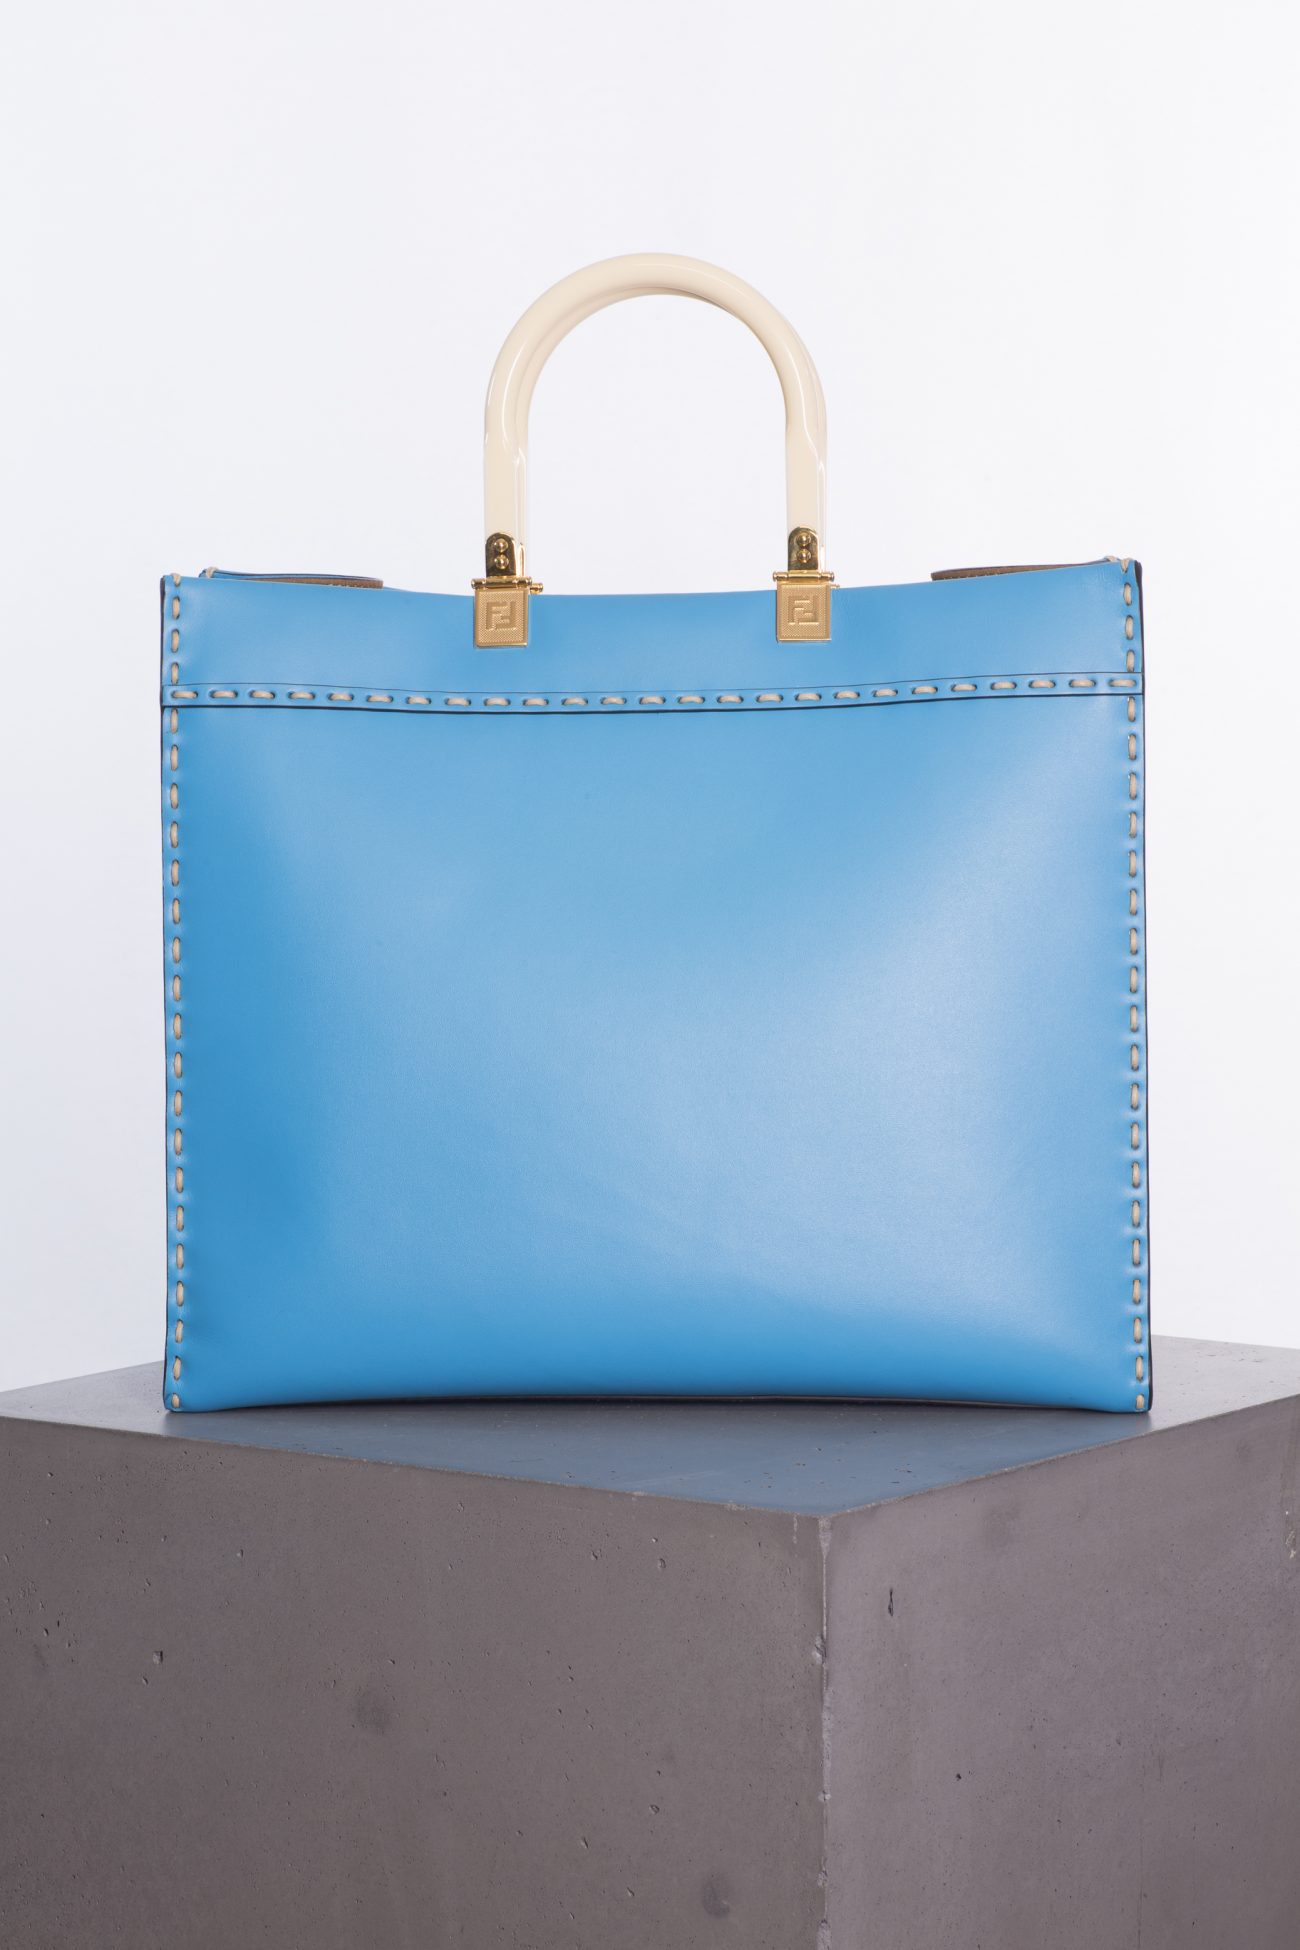 Fendi Sunshine medium blue calf leather bag